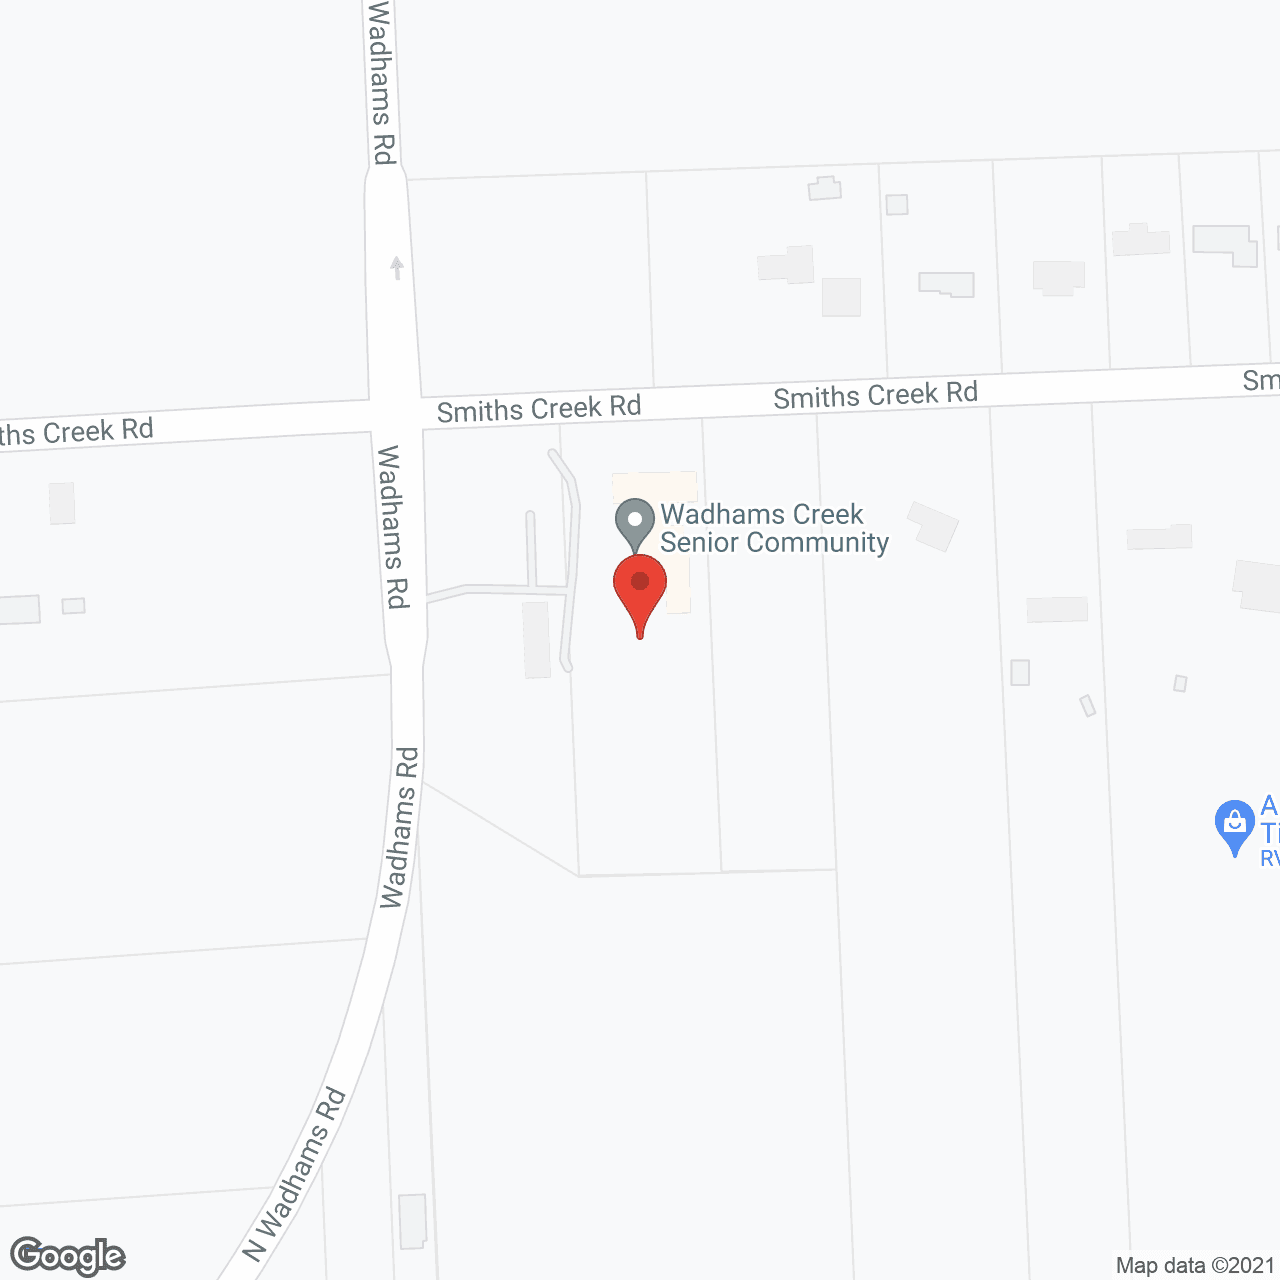 Sandalwood Creek in google map